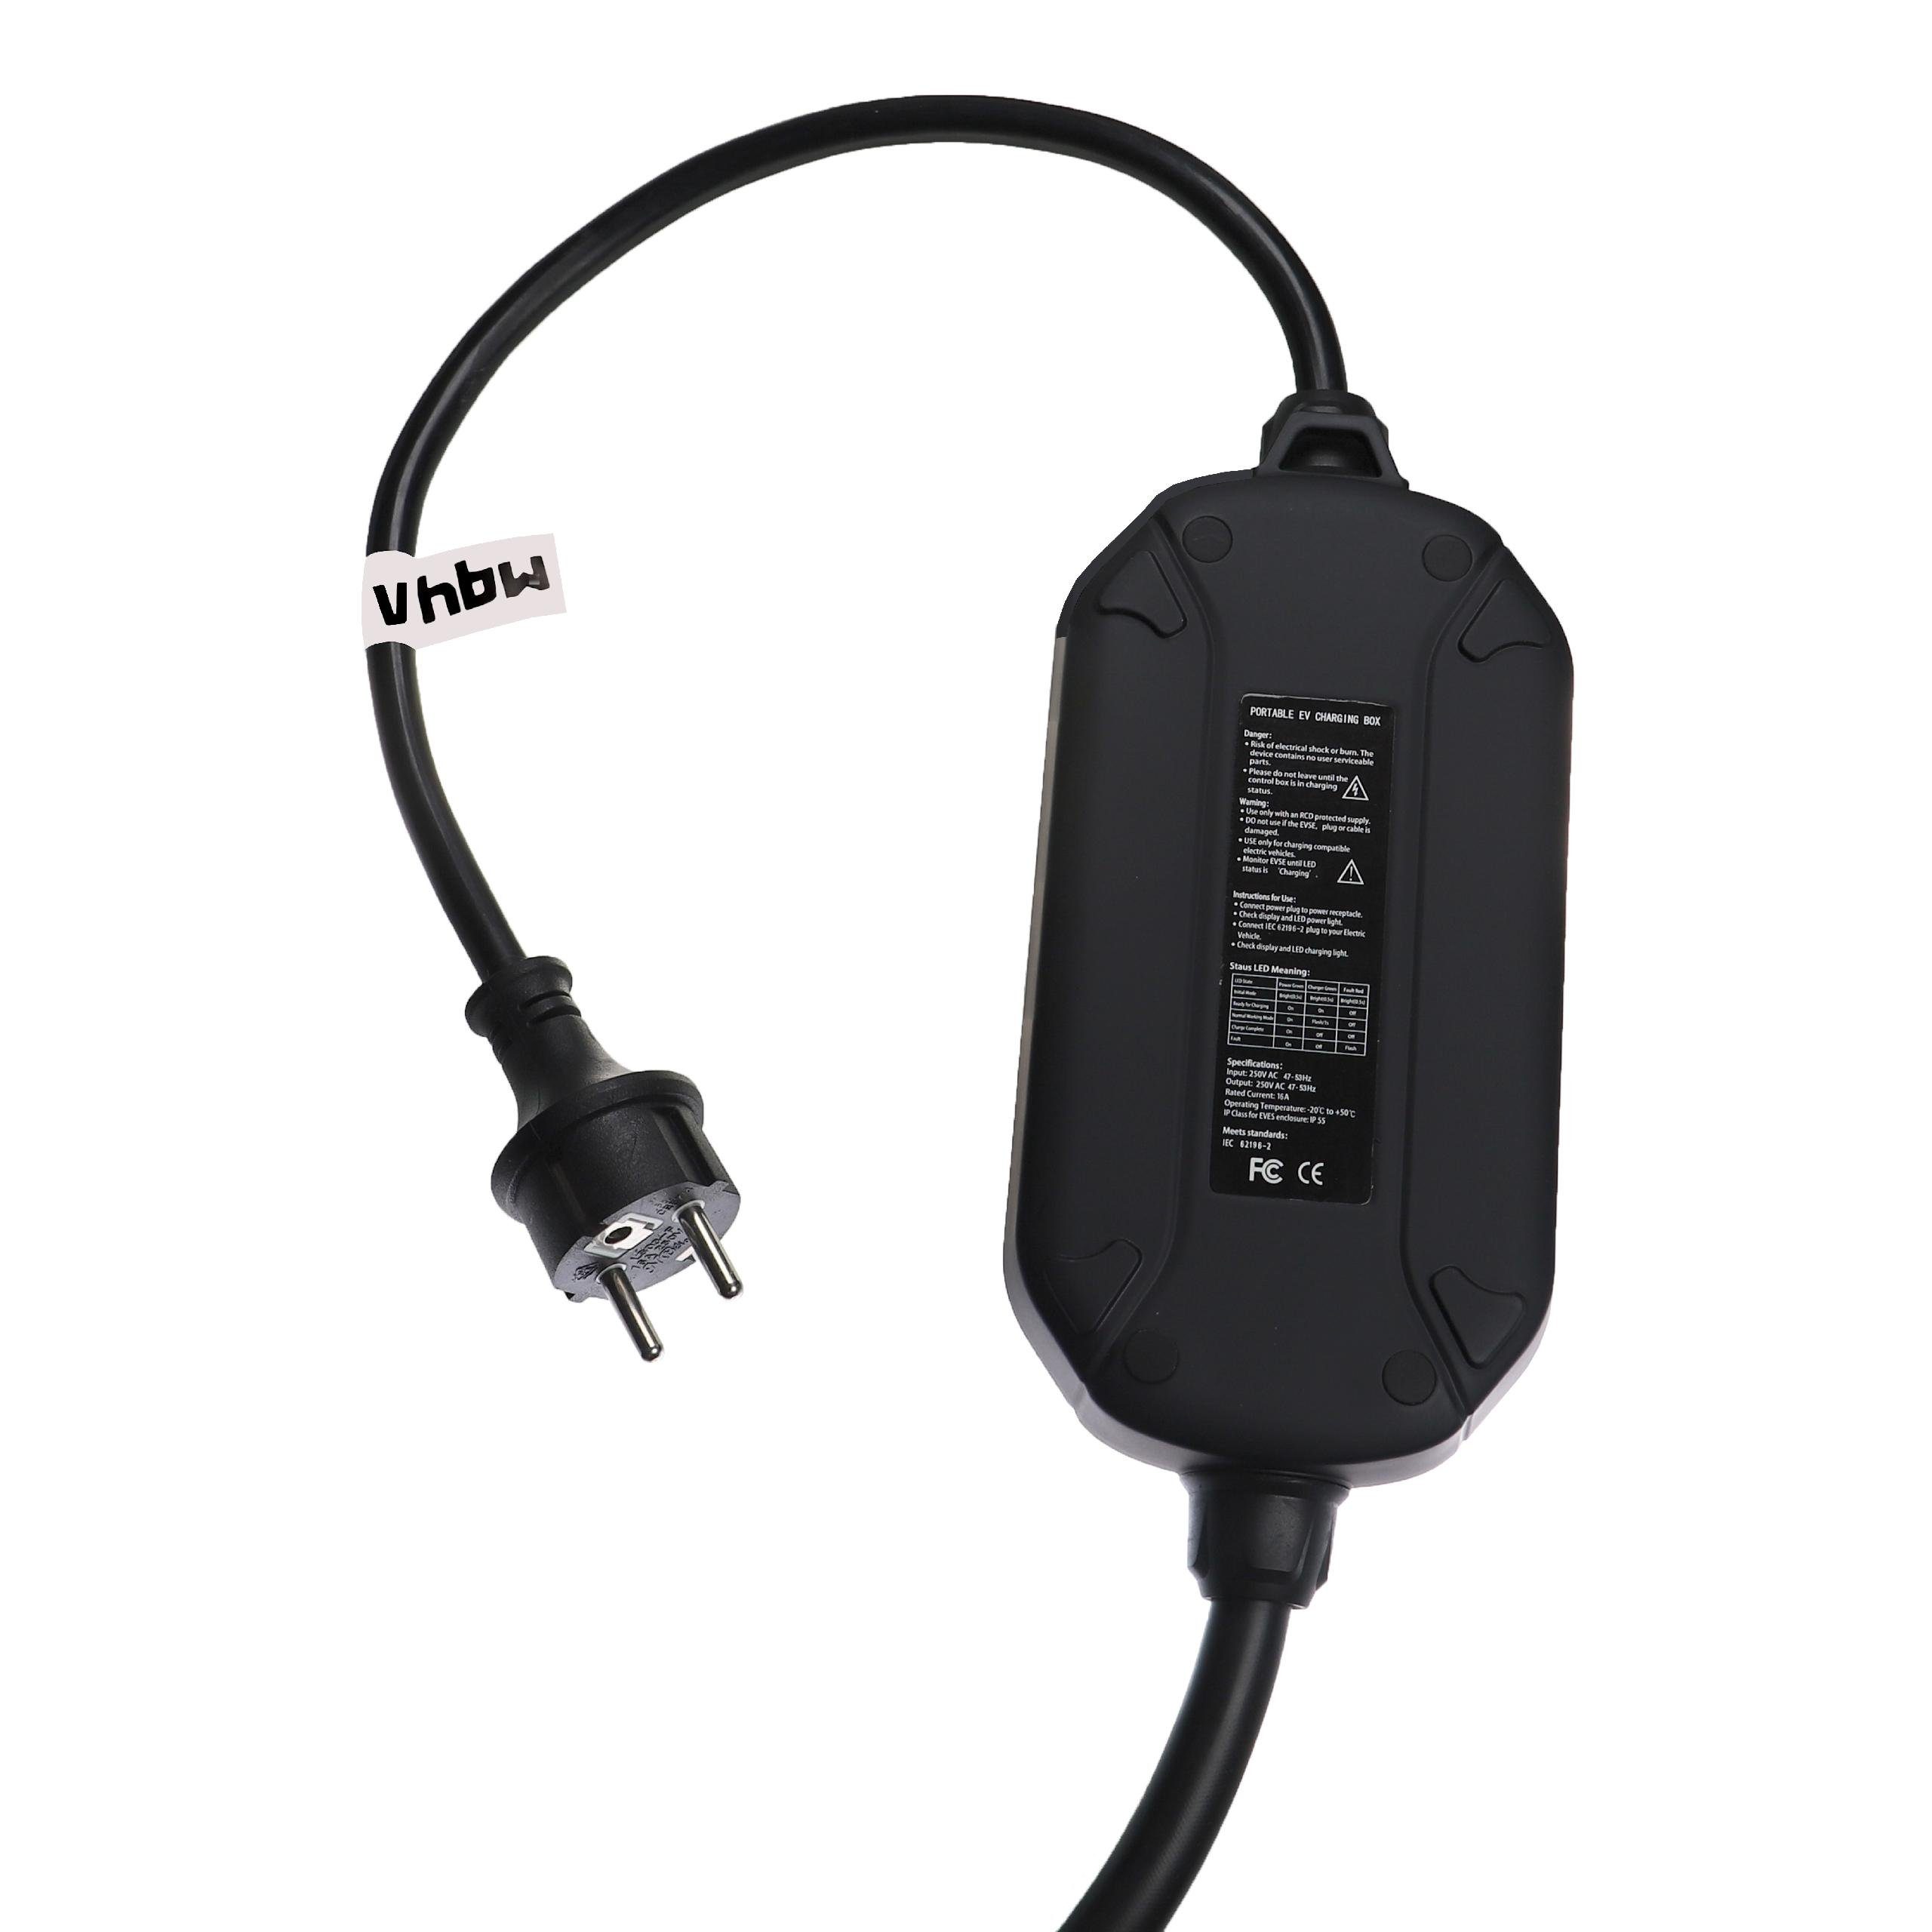 passend Ioniq Elektro-Kabel vhbw 5, Santa PHEV, Bayon Fe Ioniq, Kona, für Hyundai